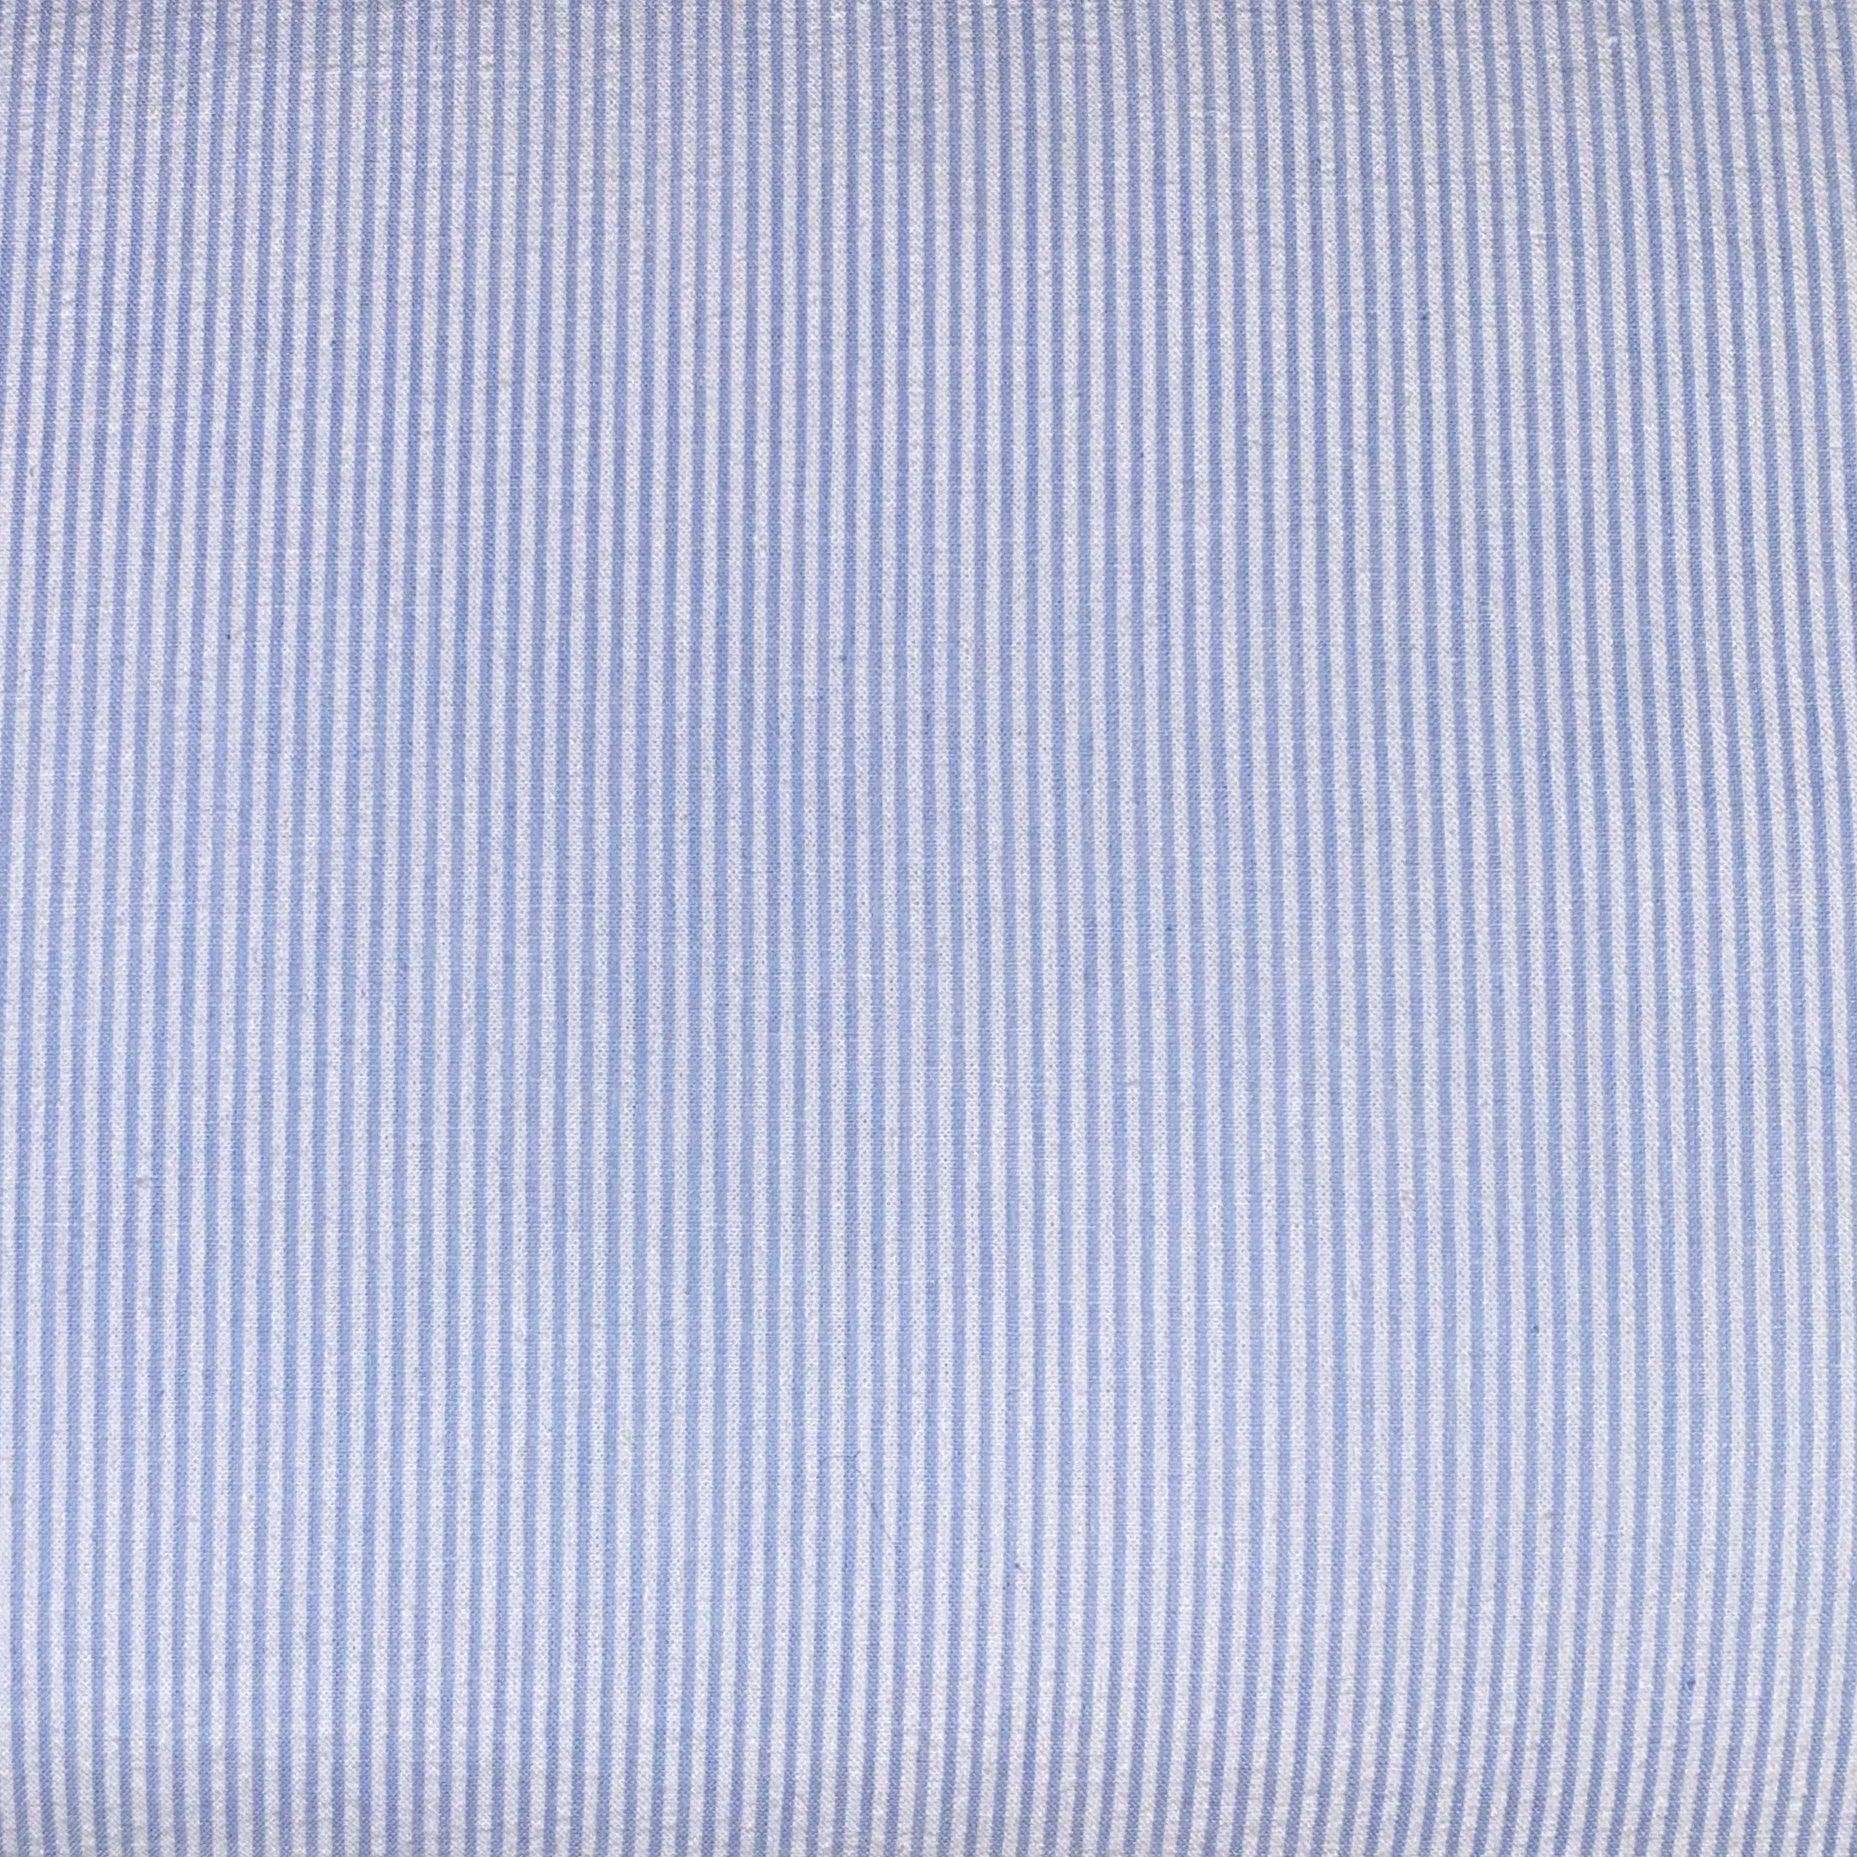 Mini Stripe Seersucker Blue and White Fabric 100% COTTON  60" WIDTH - Oak Leaf Shoppe